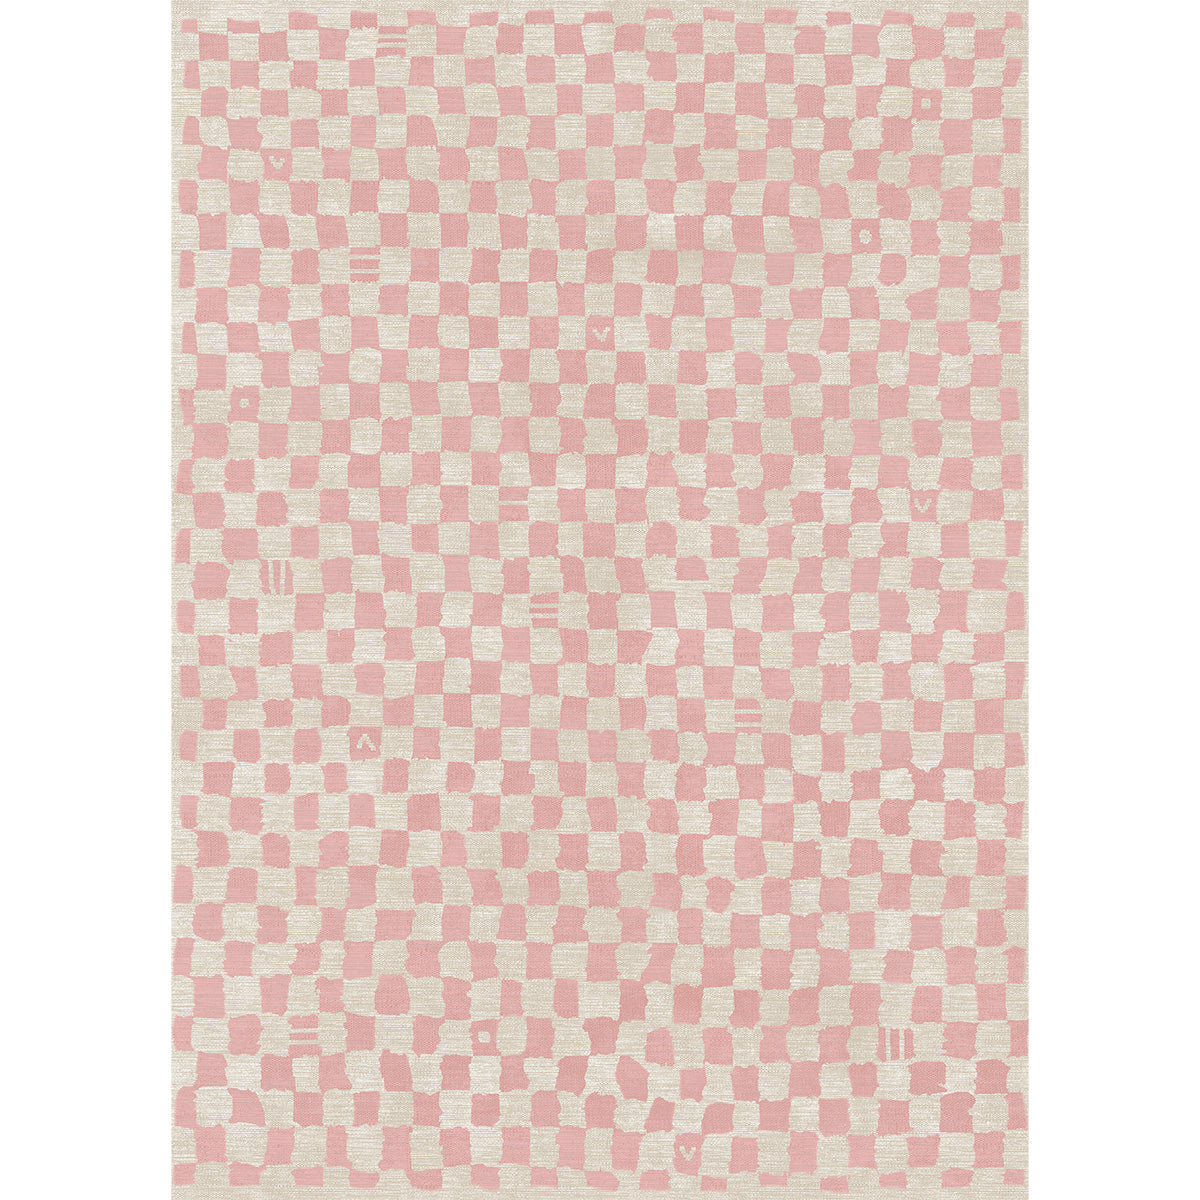 Metro Checkered Malibu Pink & White Rug